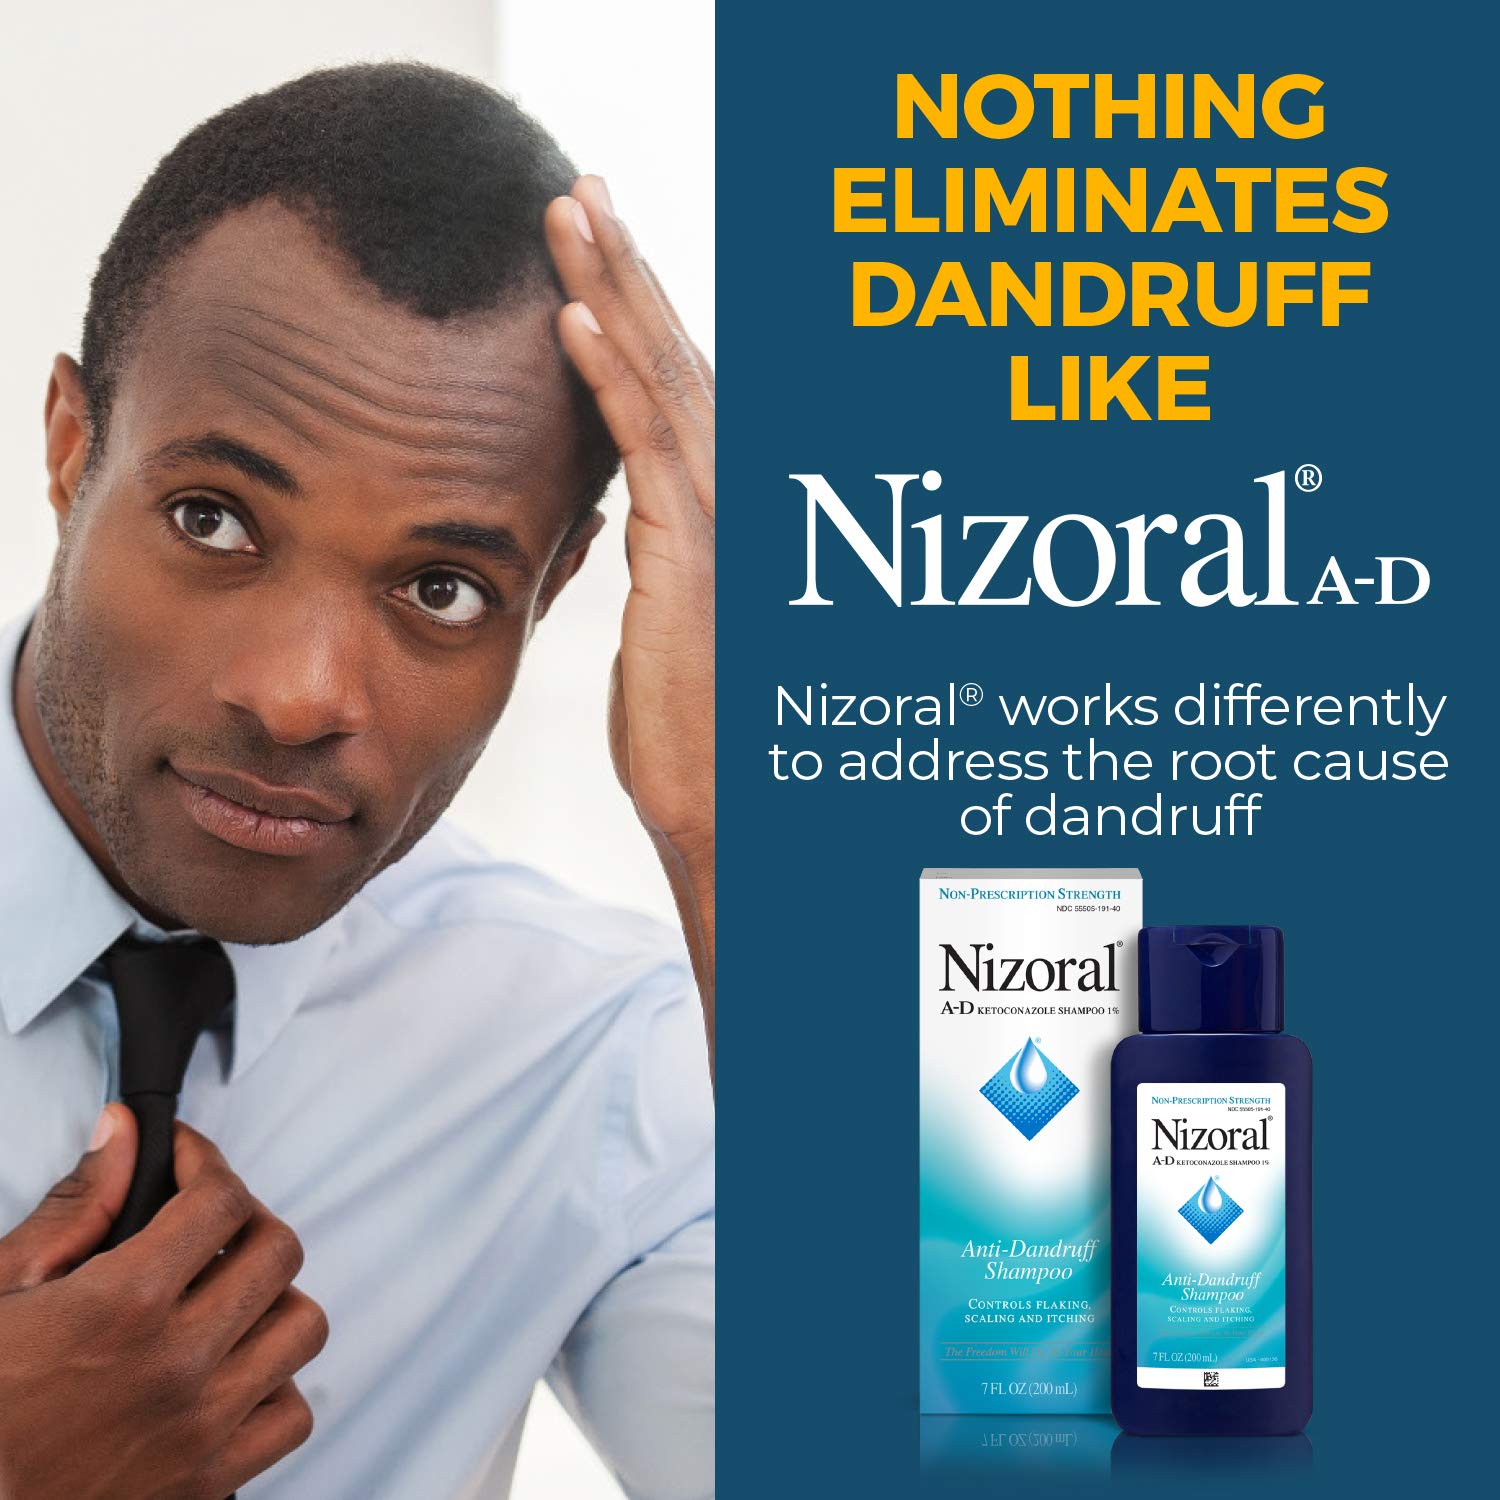 Nizoral A-D Anti-Dandruff Shampoo Full Reviews